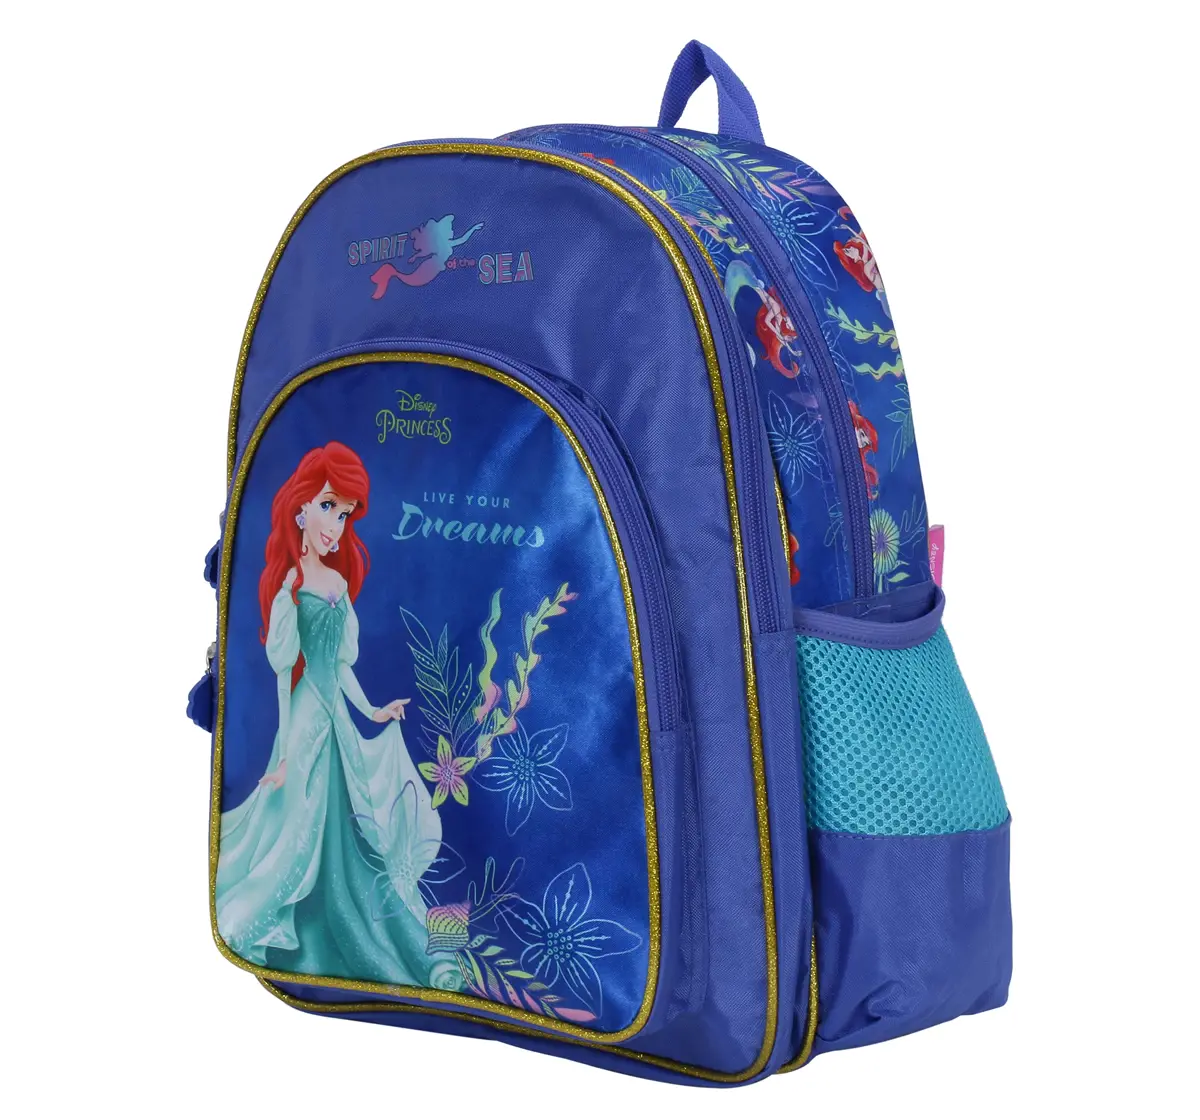 Simba Princess Live Your Dreams 14 Backpack Multicolor 3Y+